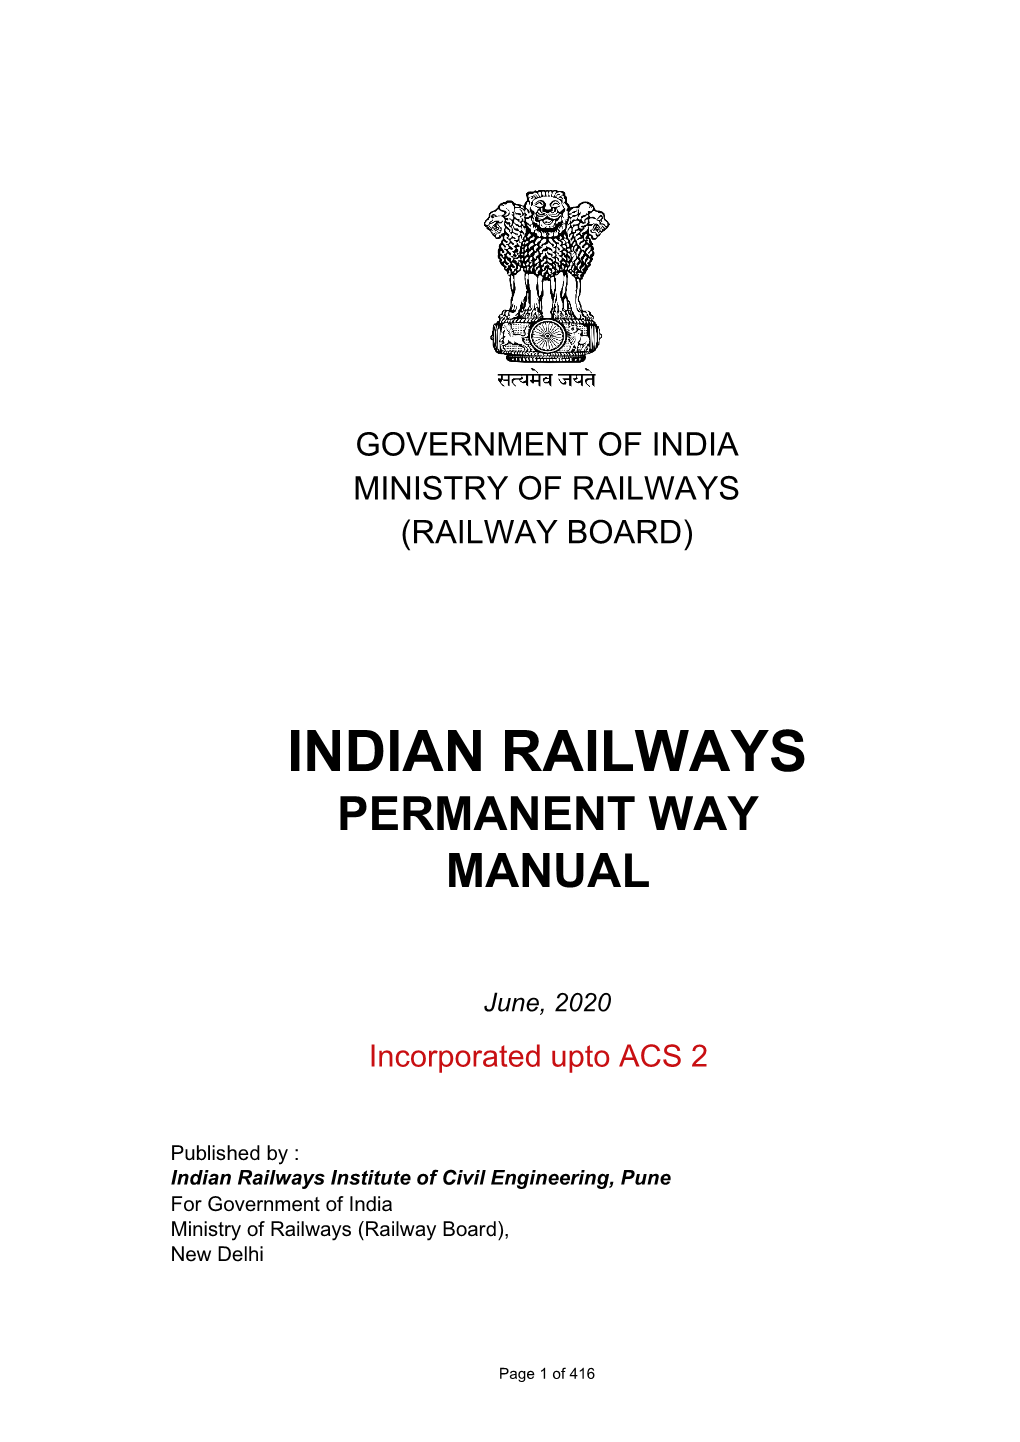 Indian Railways Permanent Way Manual